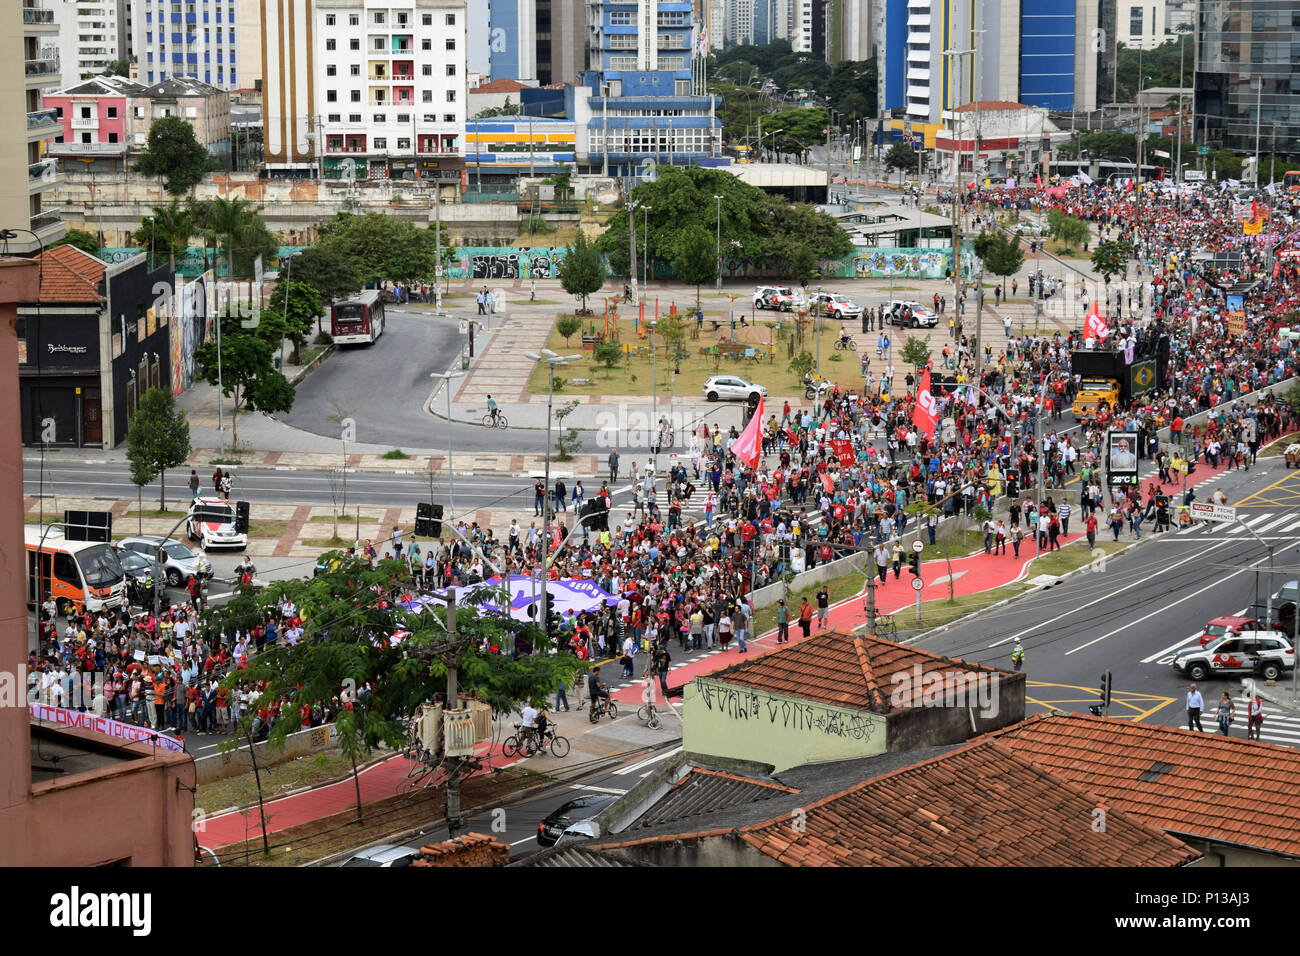 SAO PAULO, BRASIL - MAY 22, 2016: Protesters march against Brazil's interim president Michel Temer at Largo da Batata, Pinheiros, Sao Paulo.  Temer's  Stock Photo